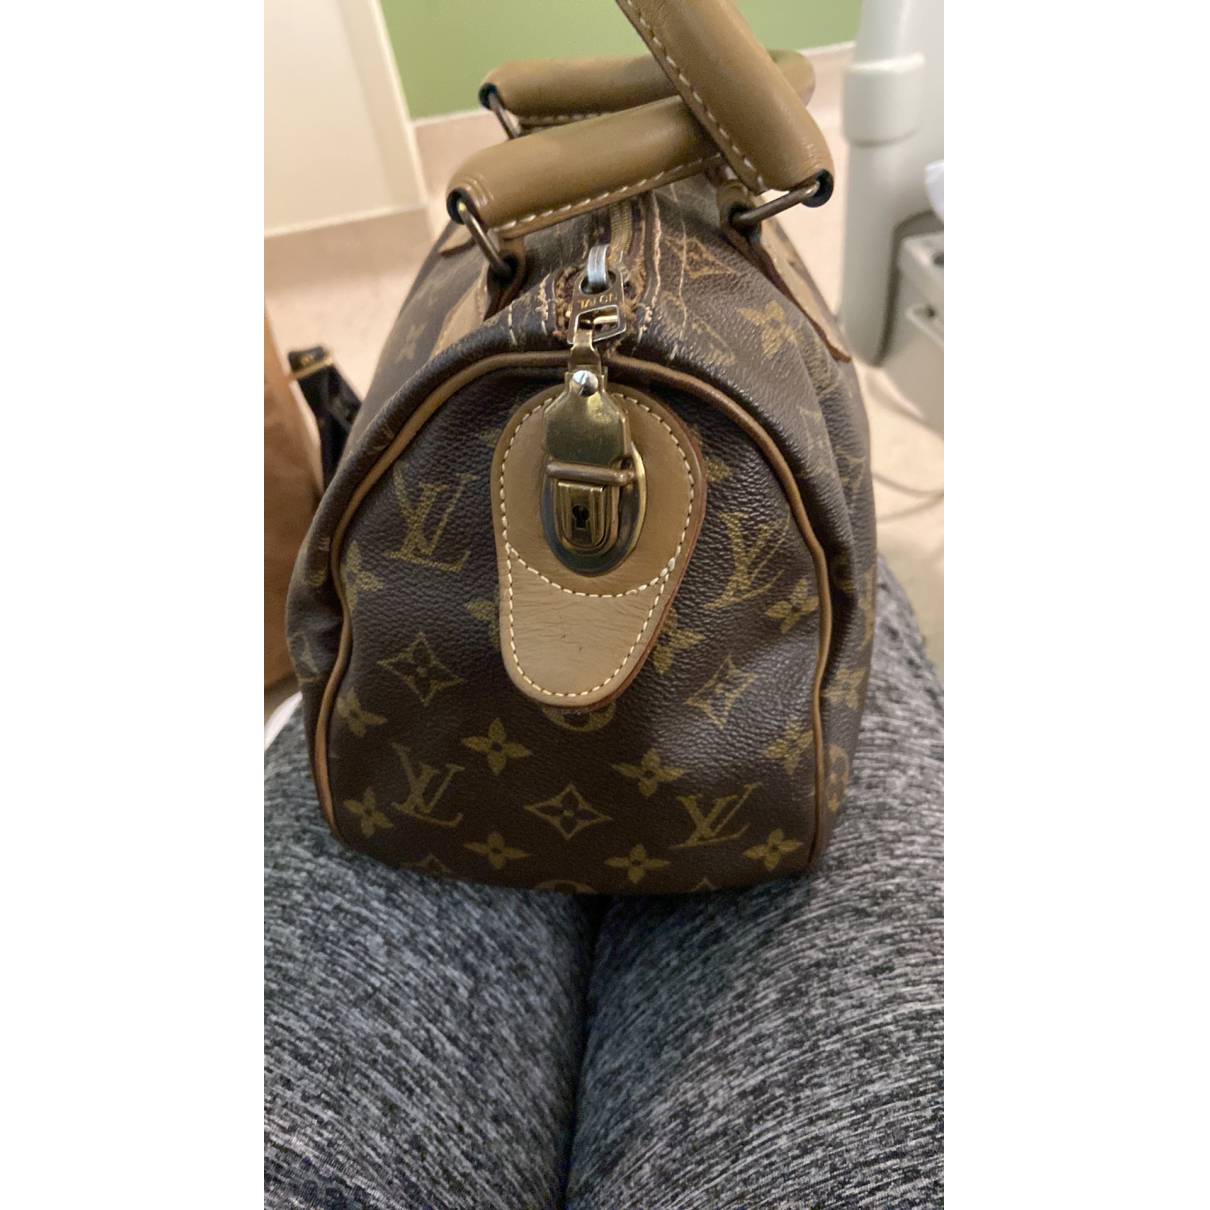 Louis Vuitton Speedy Handbag